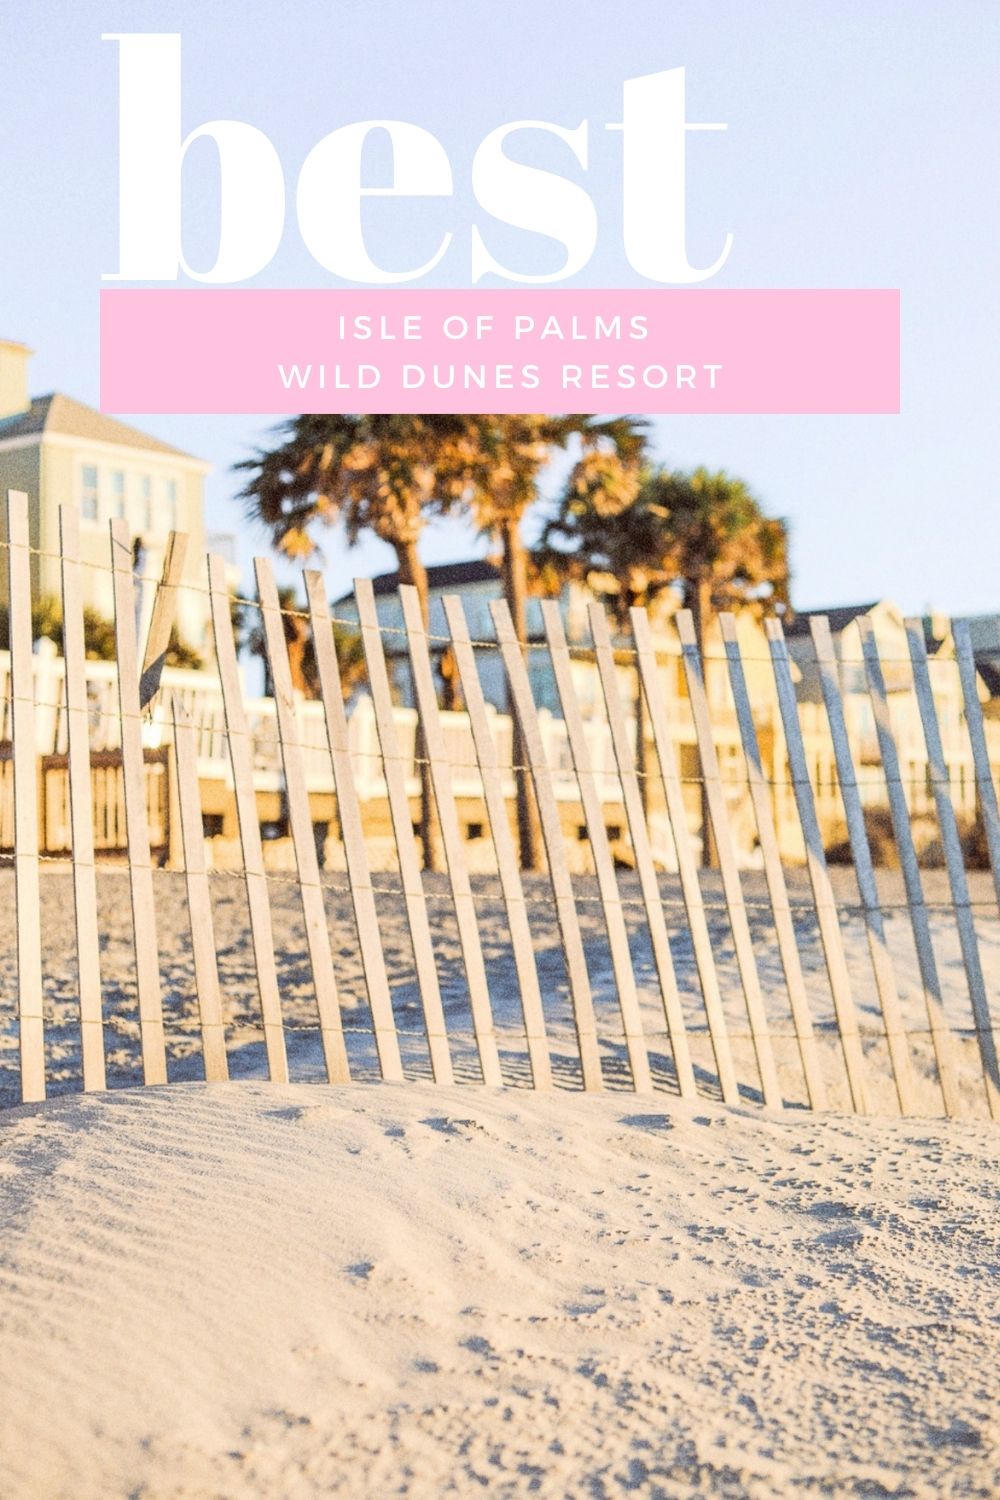 travel guide, southern living magazine, wild dunes resort, isle of palms South Carolina, beach, hotel, coast living magazine best beach towns, spa, tennis, things to do